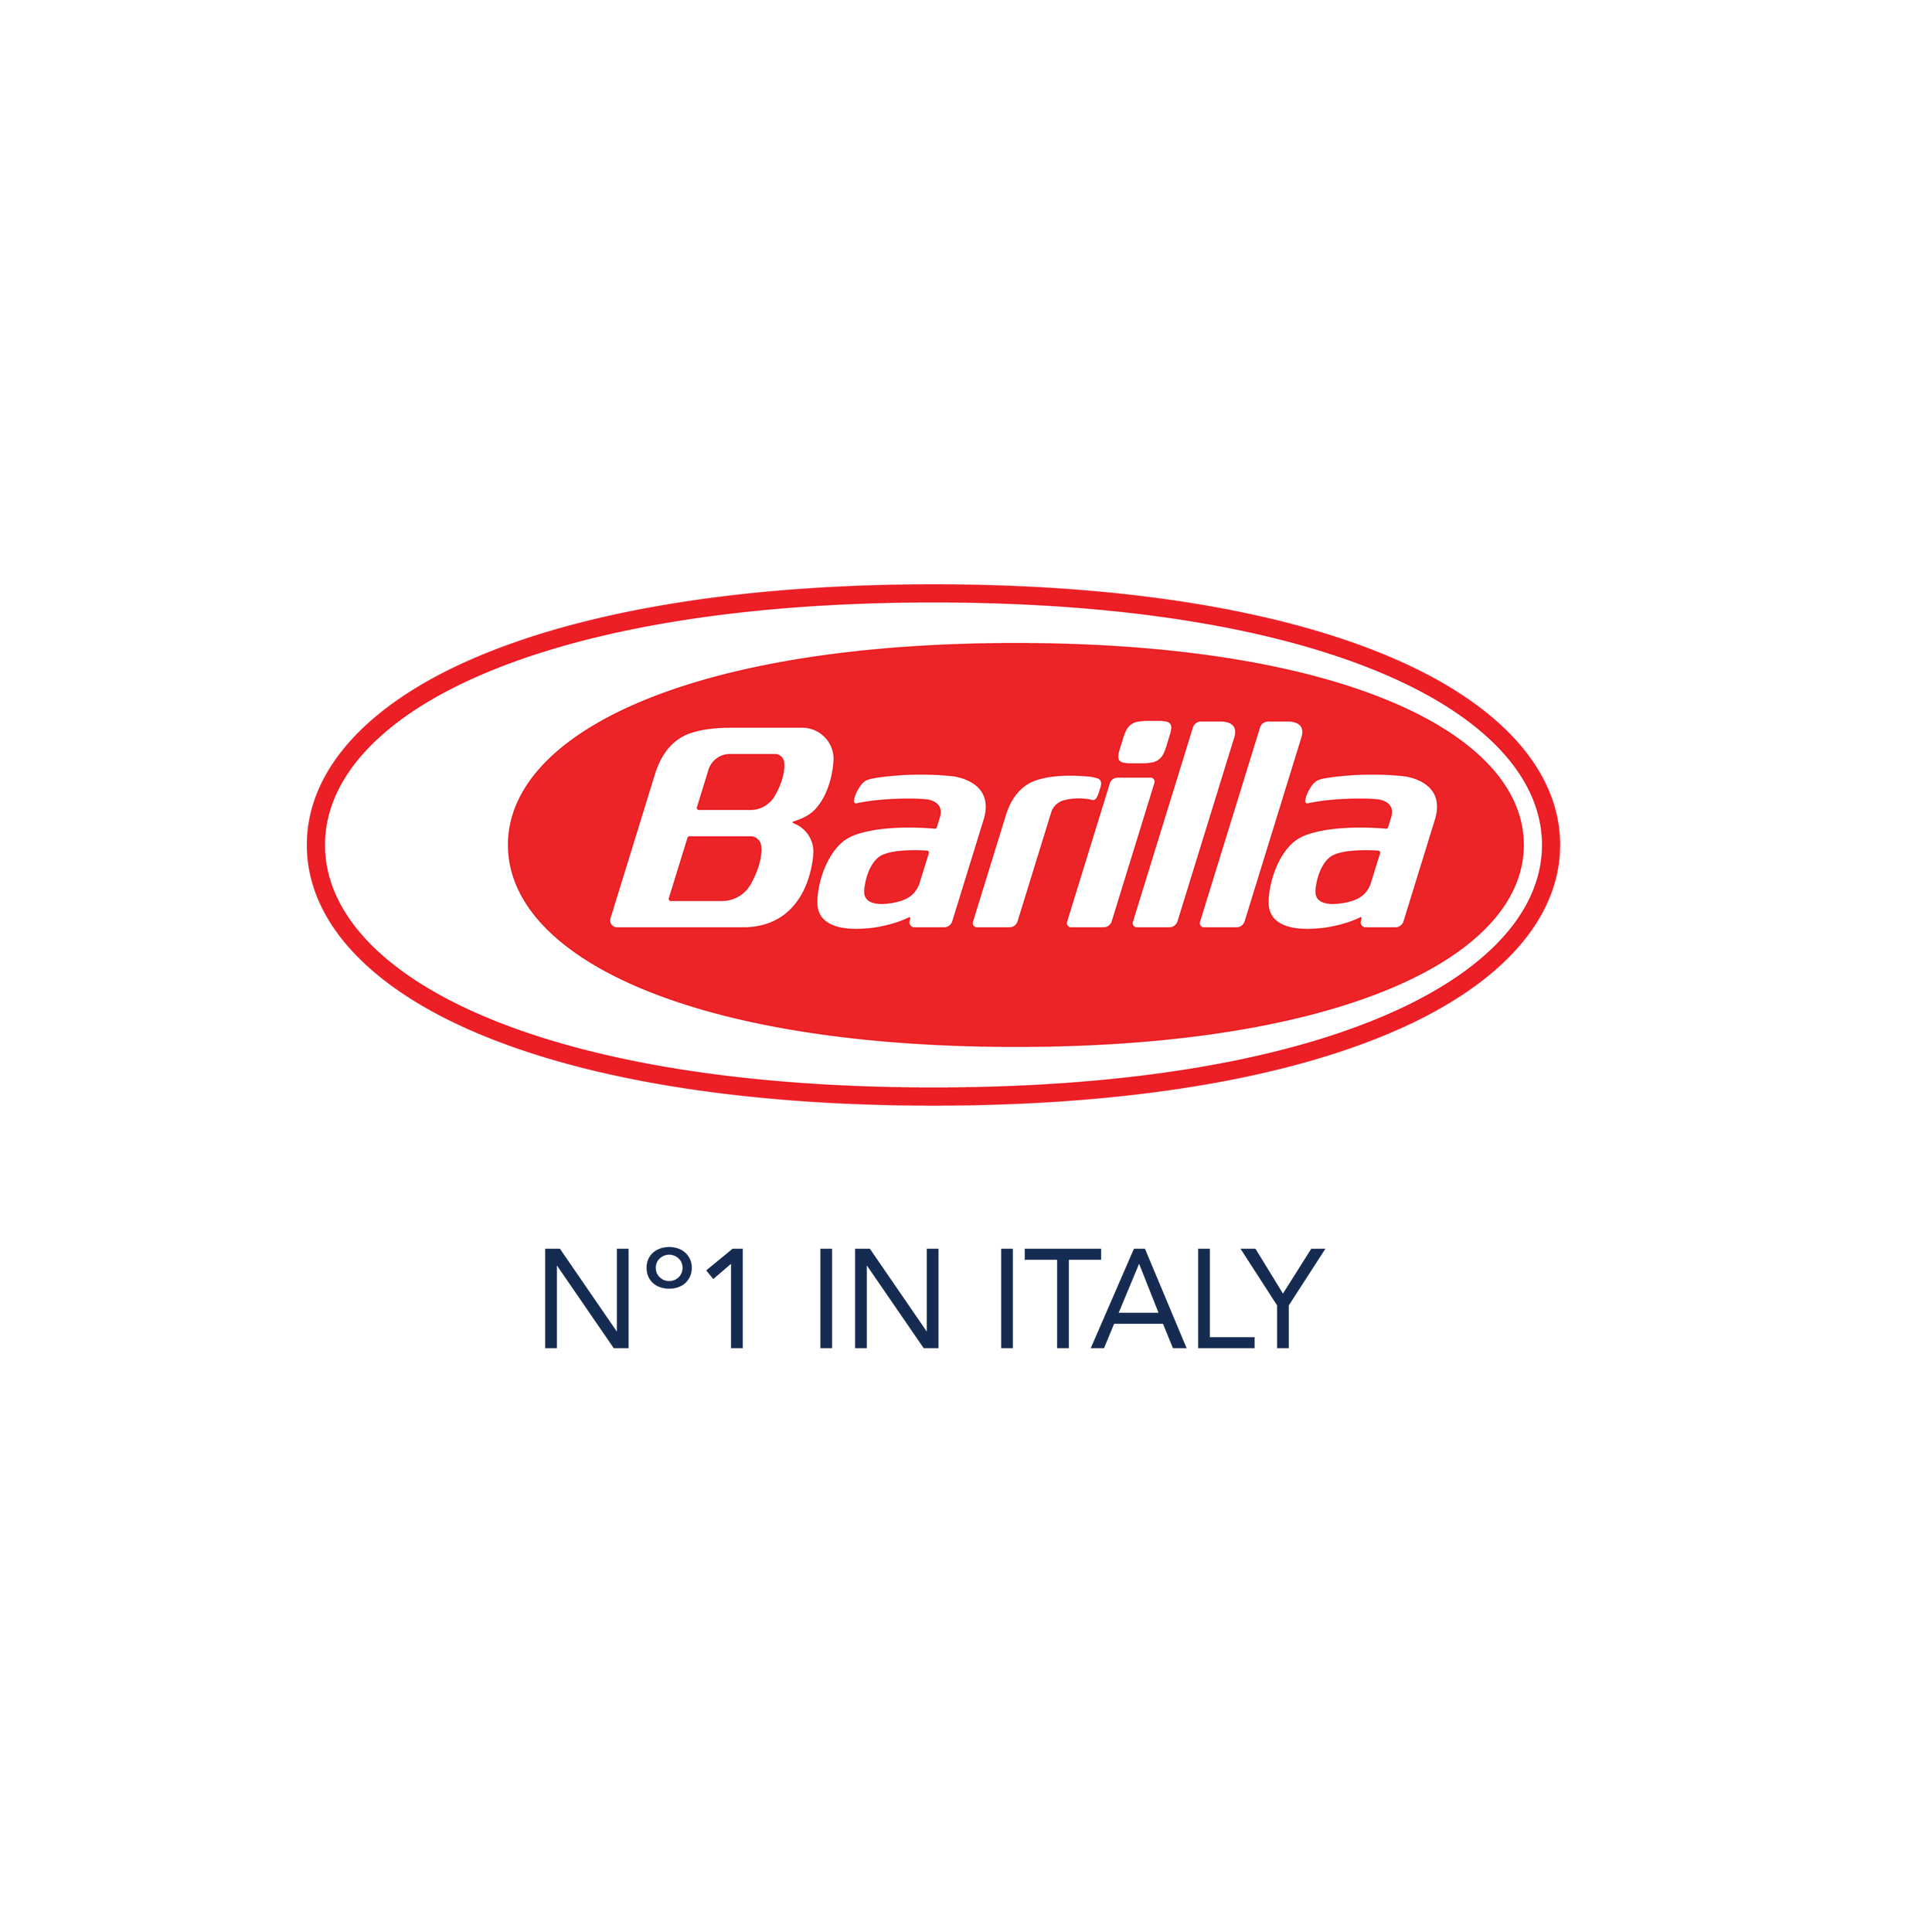 Barilla Logo - Barilla LOGO 2016 No1InItaly Outlined - Bite Communications